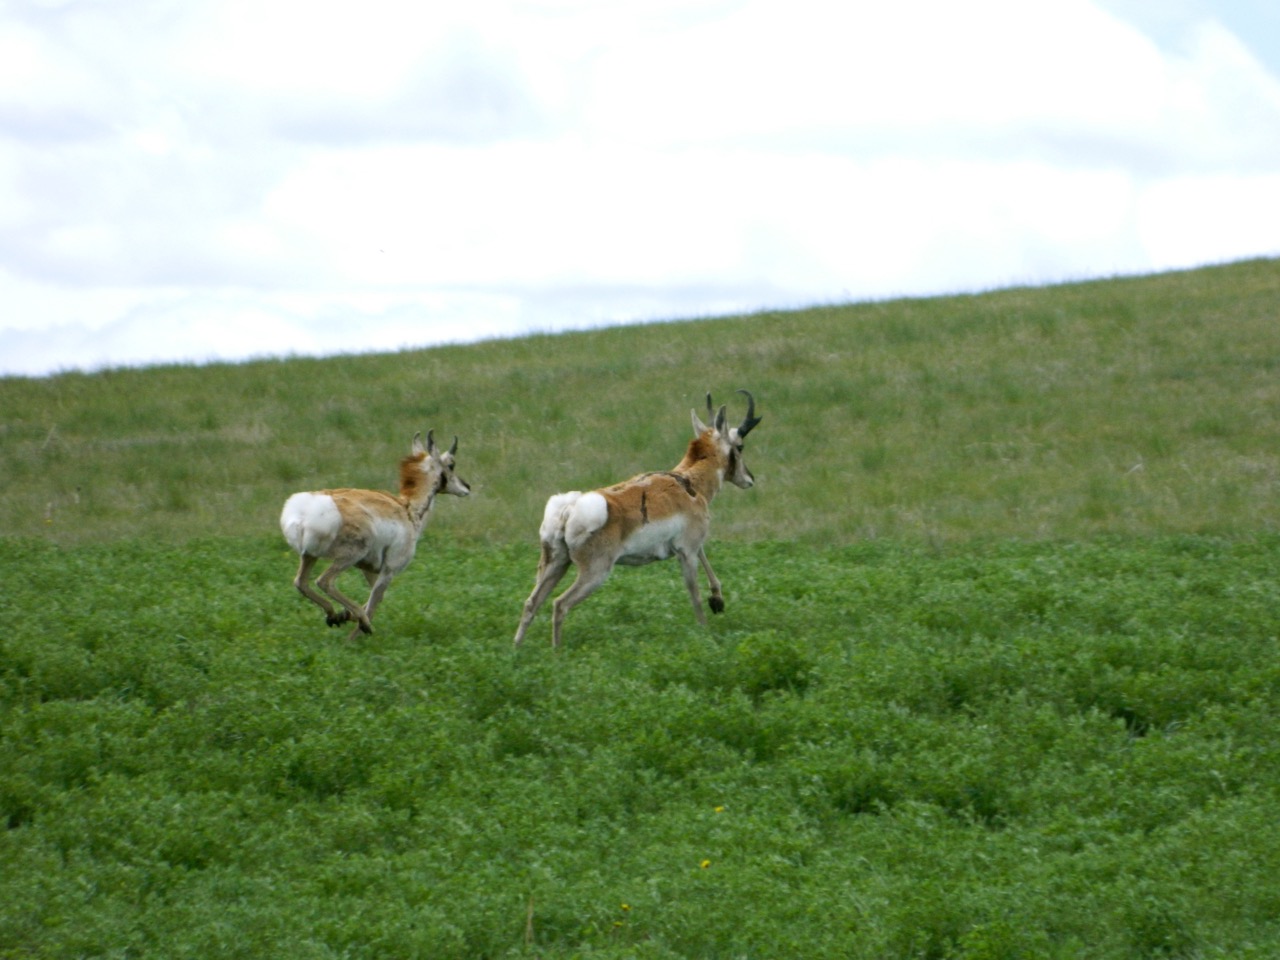 American antelope on the run from danger.